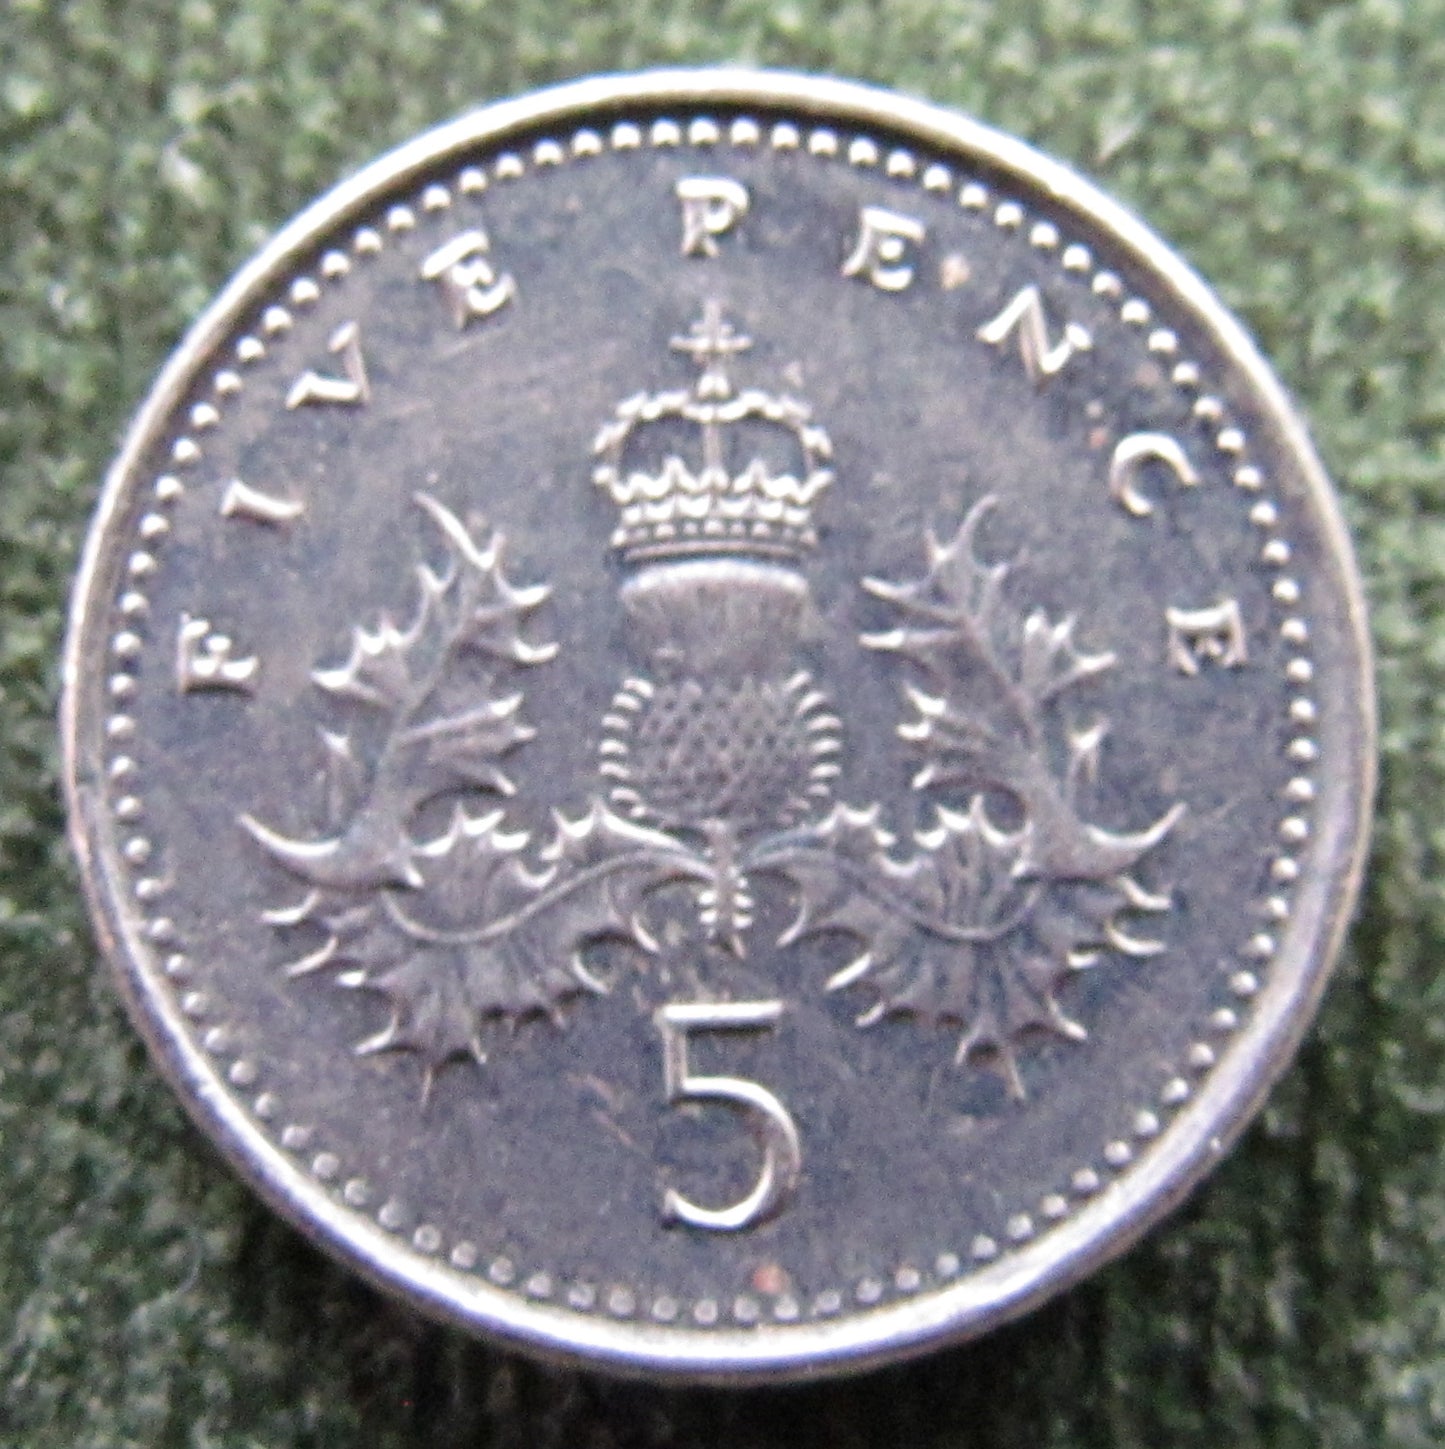 GB British UK English 2001 5 New Pence Queen Elizabeth II Coin